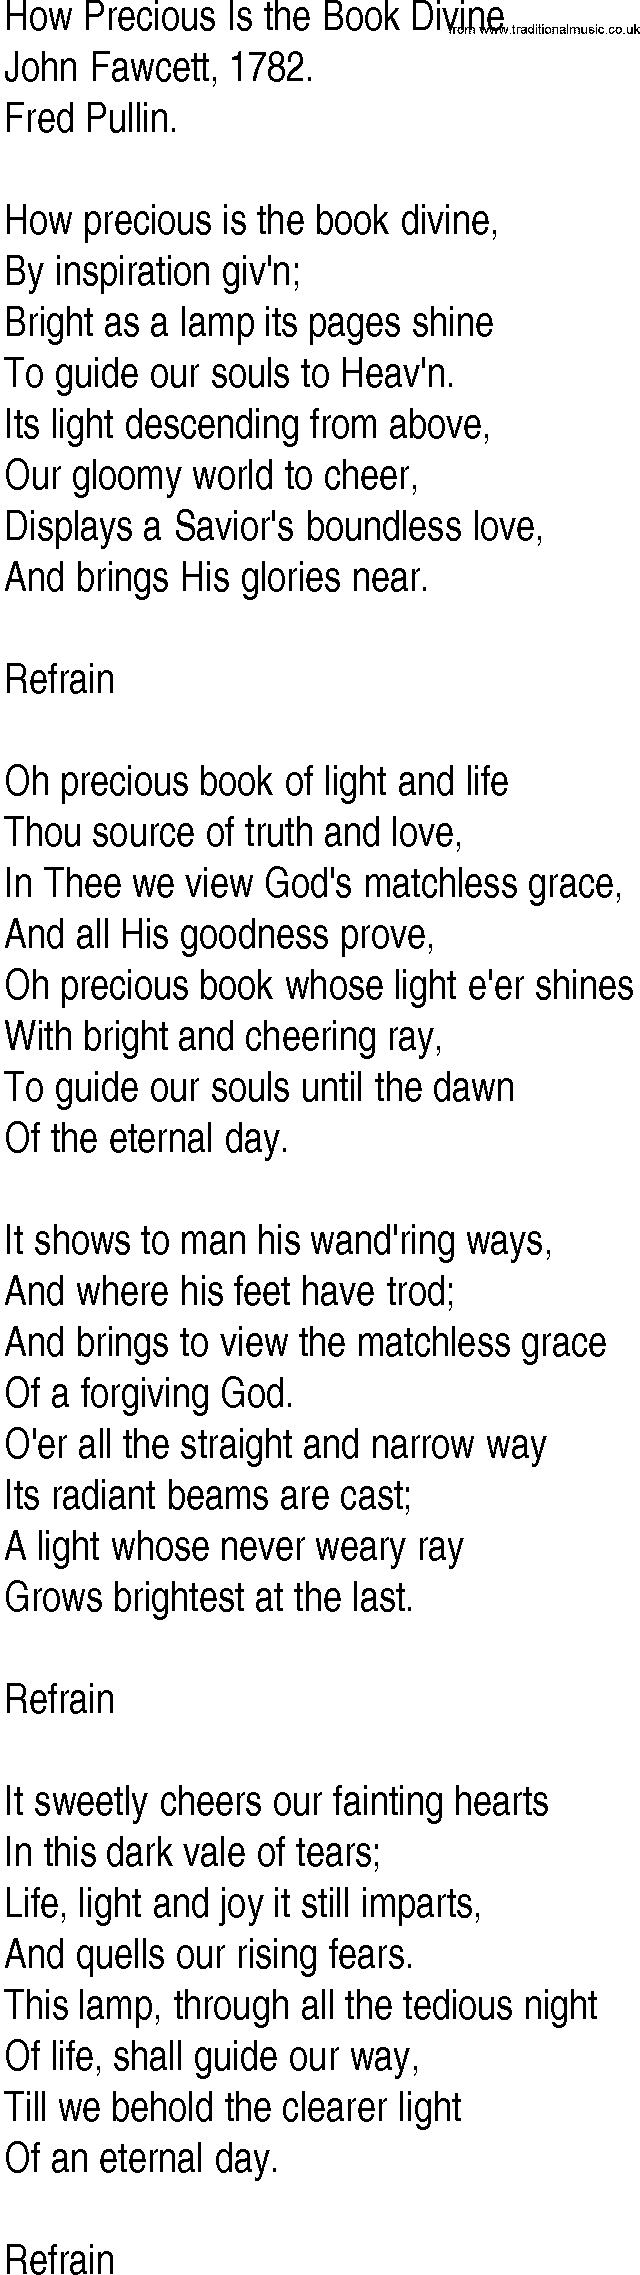 Hymn and Gospel Song: How Precious Is the Book Divine by John Fawcett lyrics